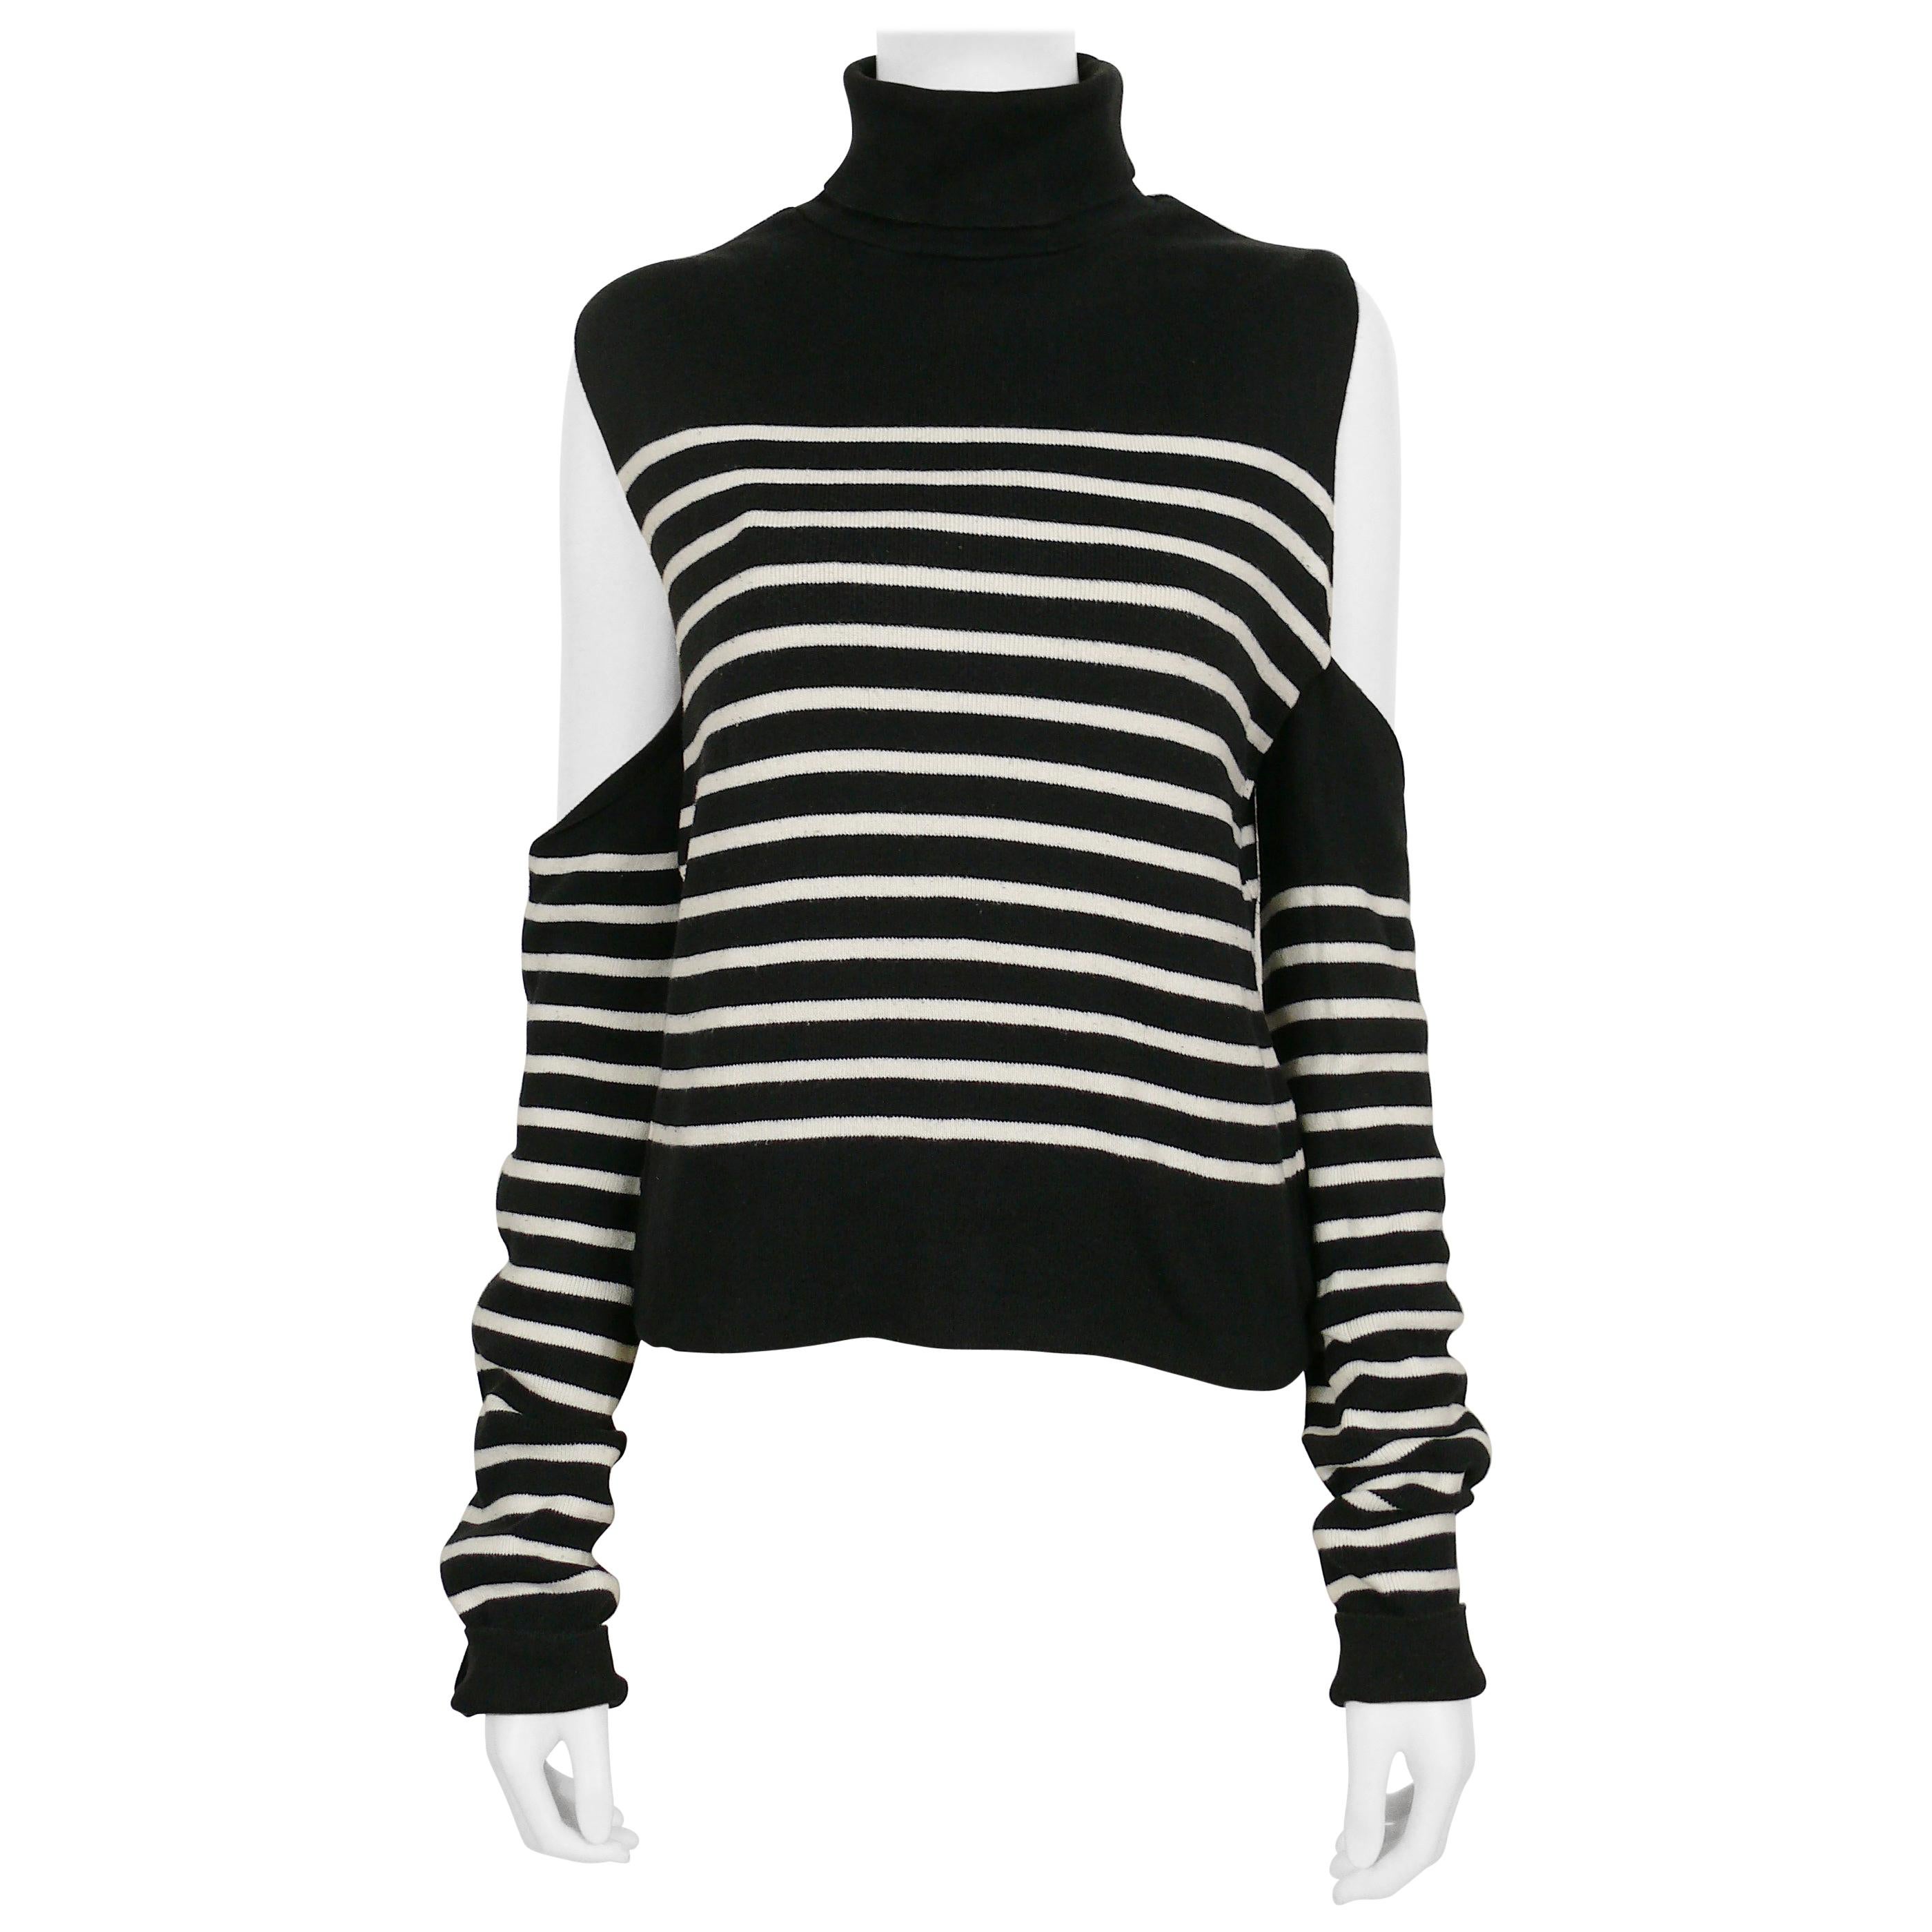 Jean Paul Gaultier Vintage Iconic Destructured Sailor Stripes Sweater